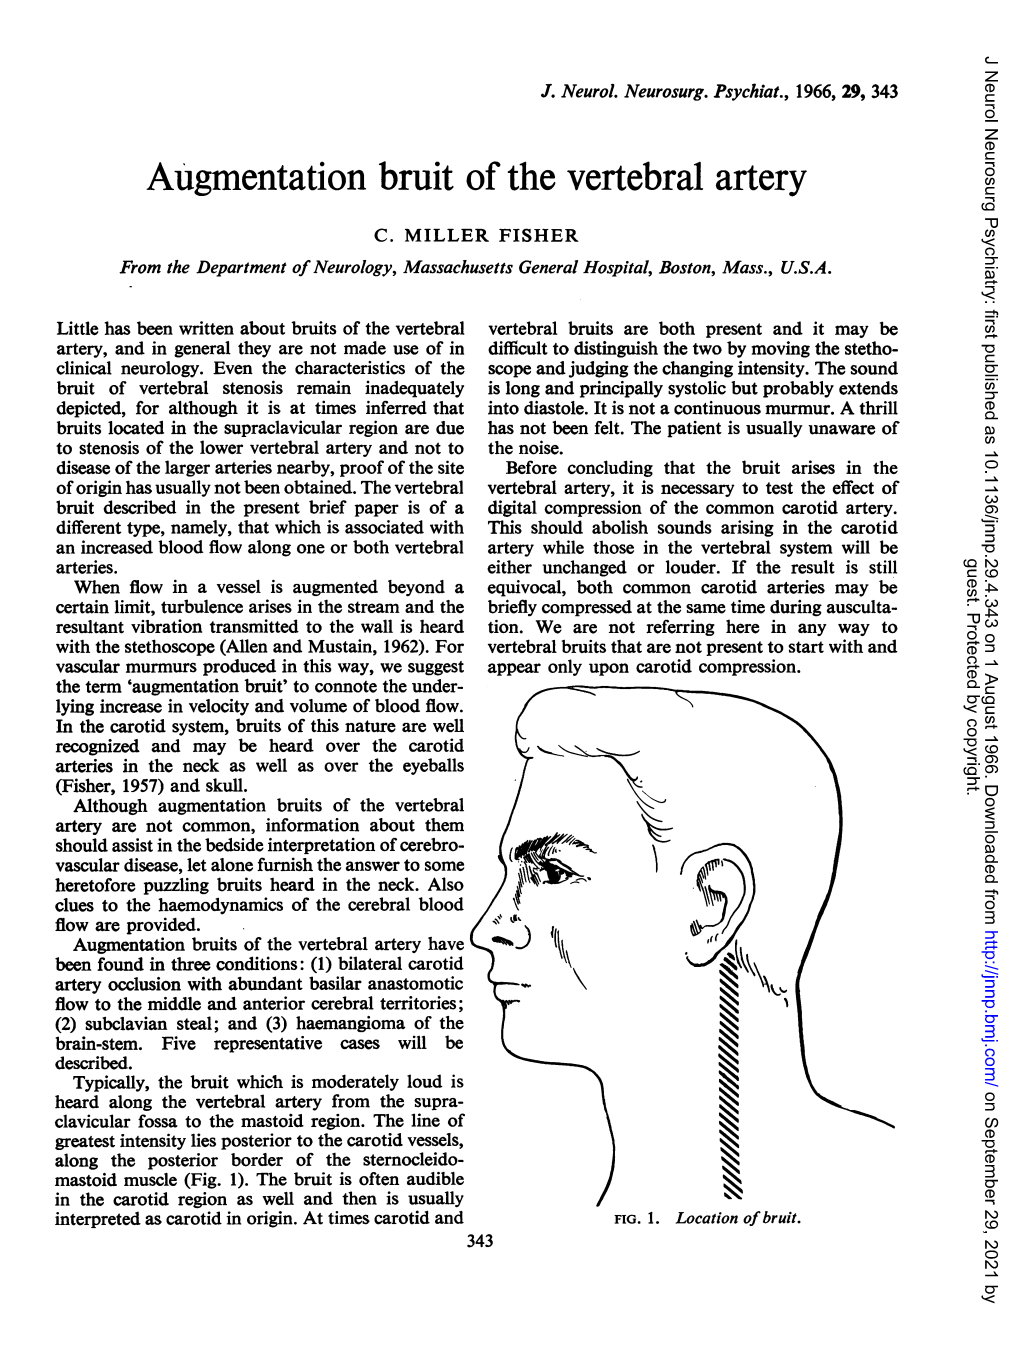 Augmentation Bruit of the Vertebral Artery